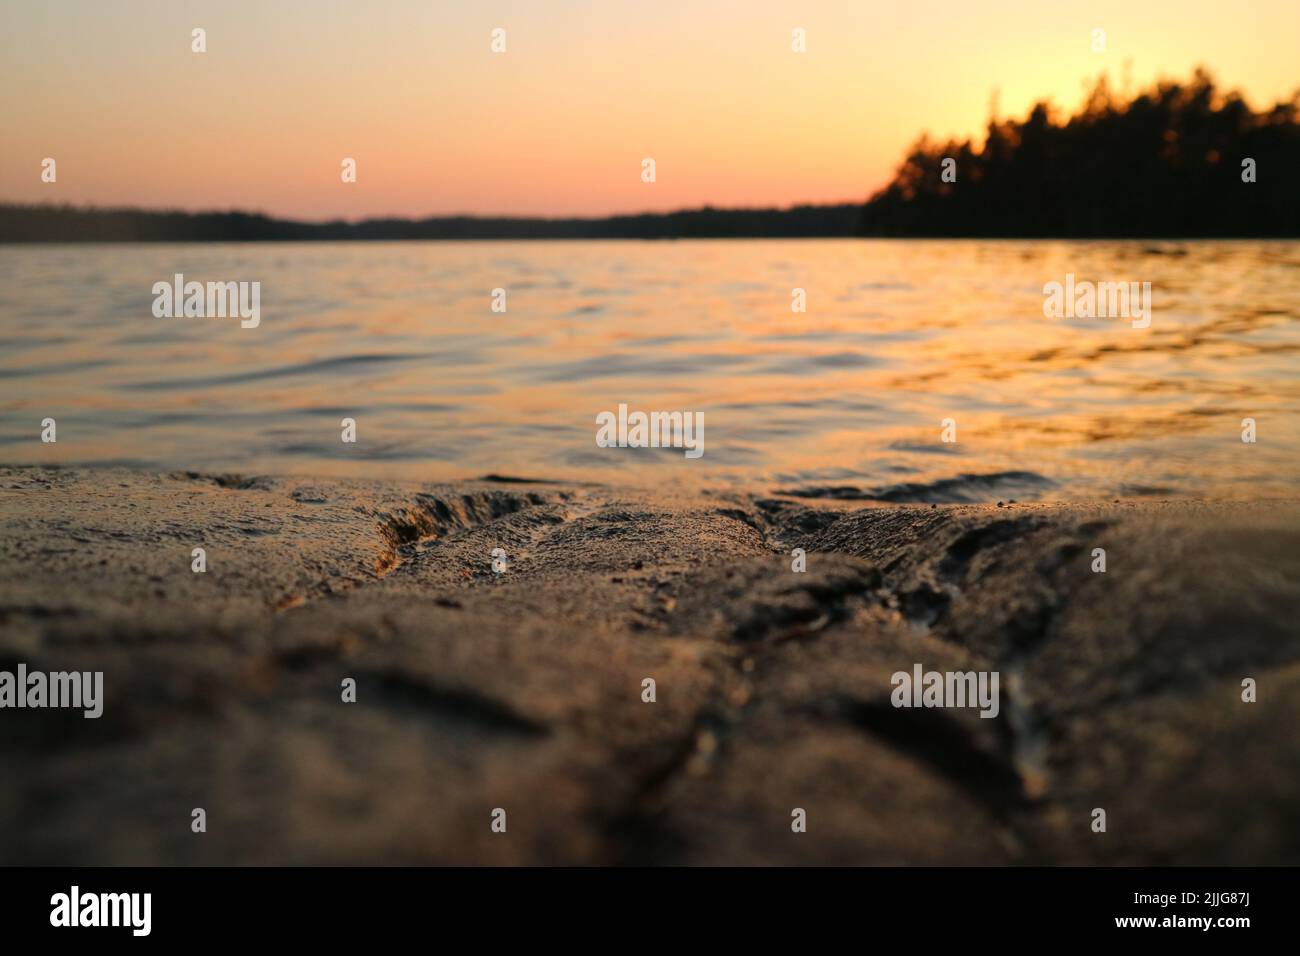 Lake Meiko in Meiko outdoor recreation area in Kirkkonummi, Finland as the sun is setting Stock Photo